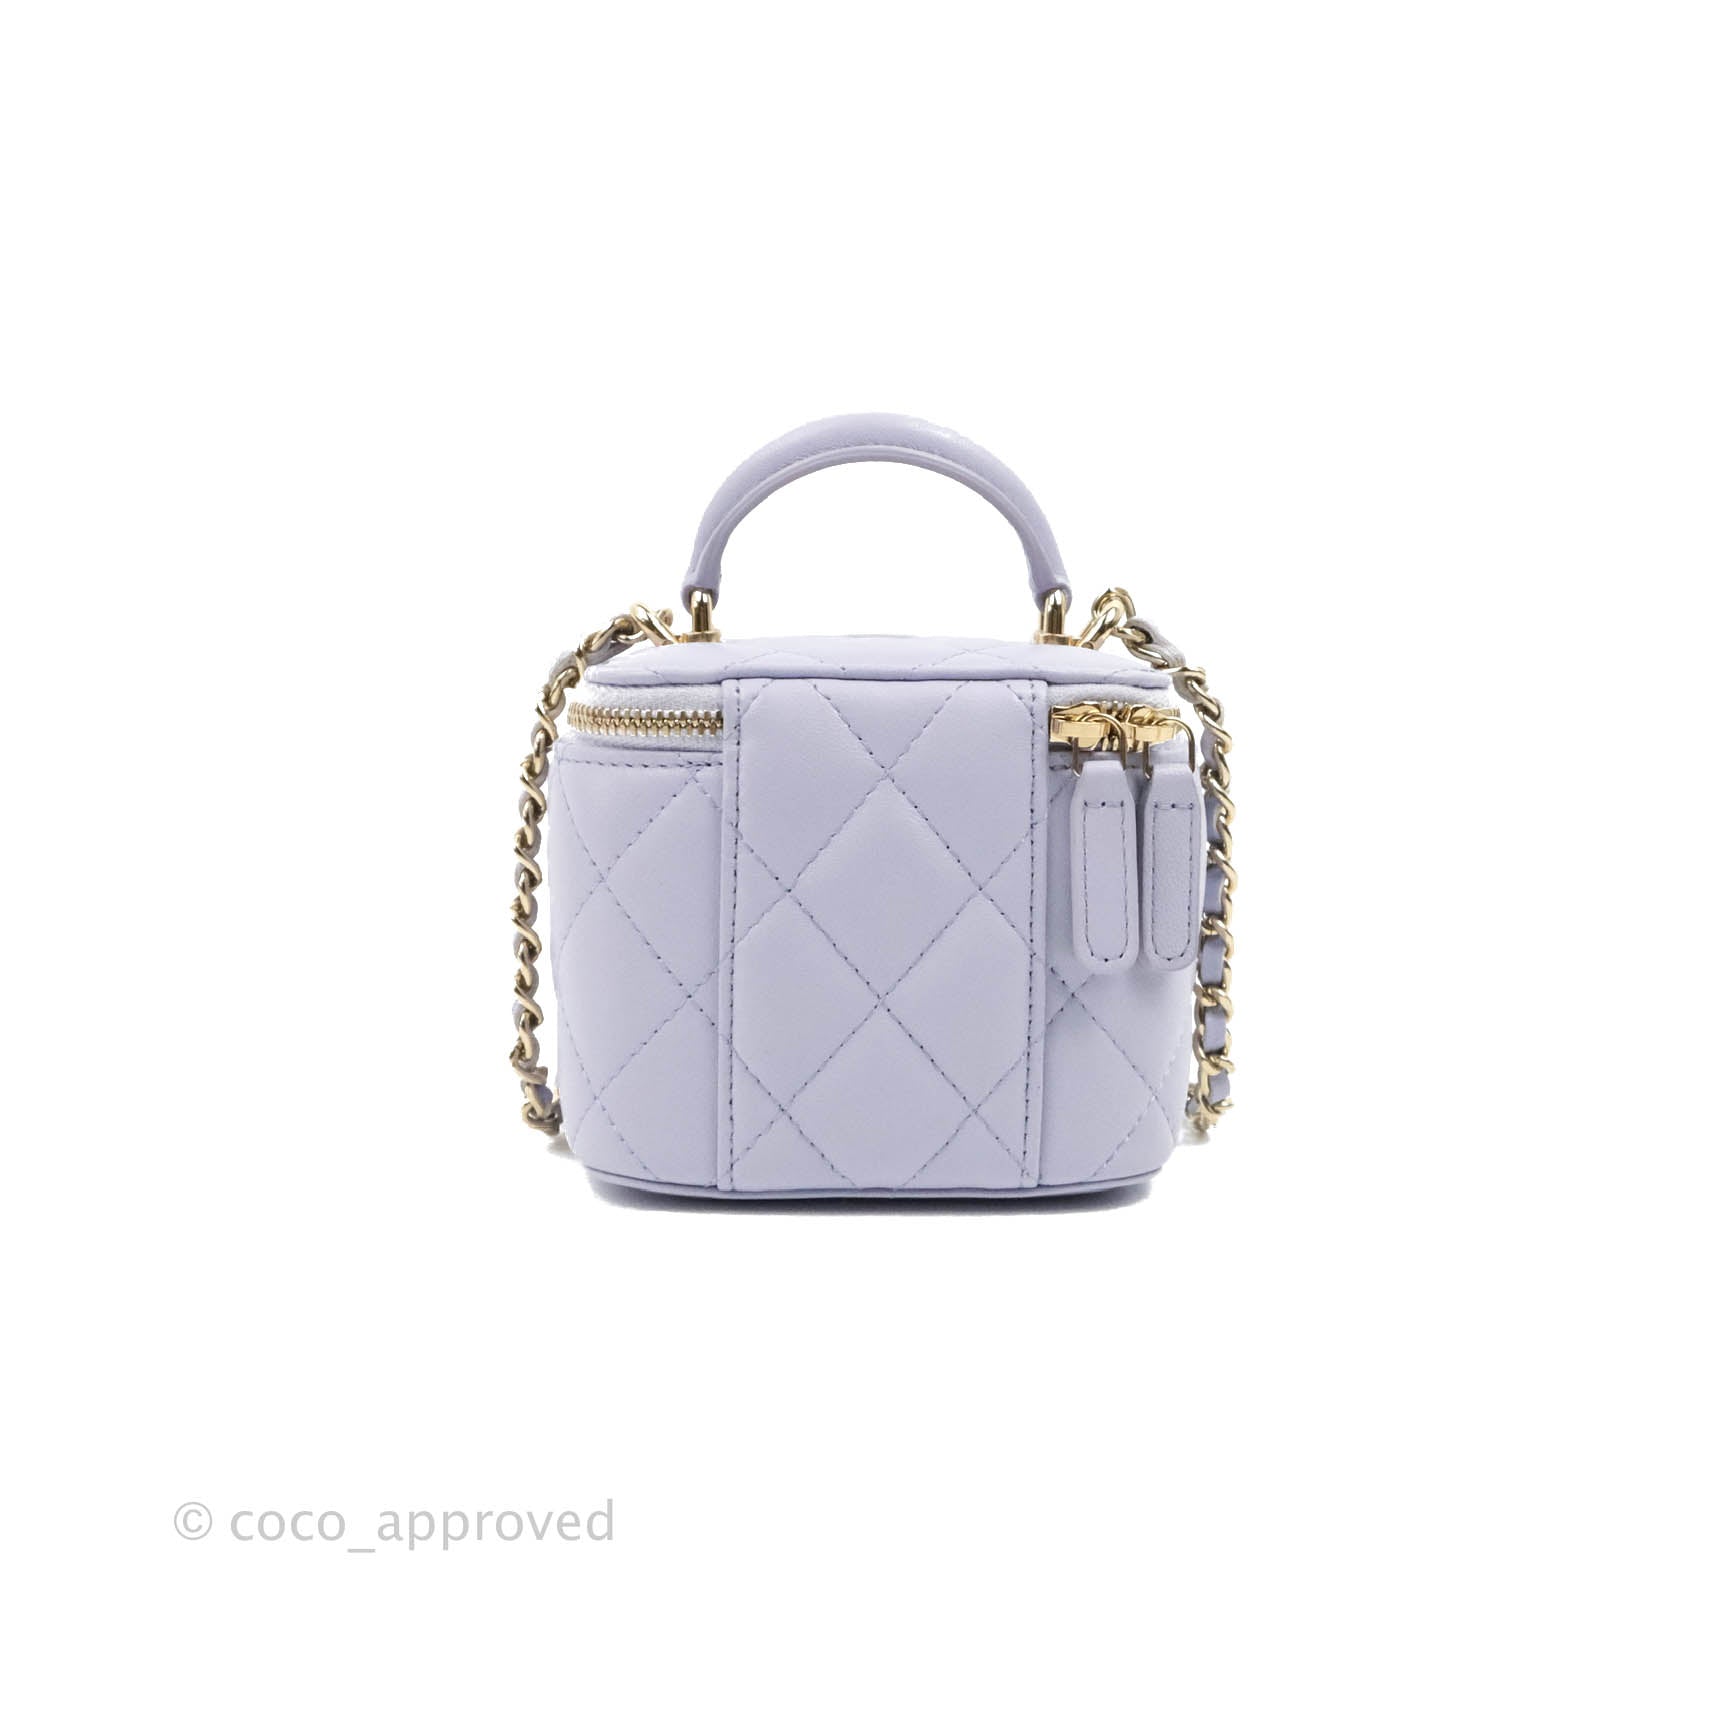 Chanel small vanity bag - Gem